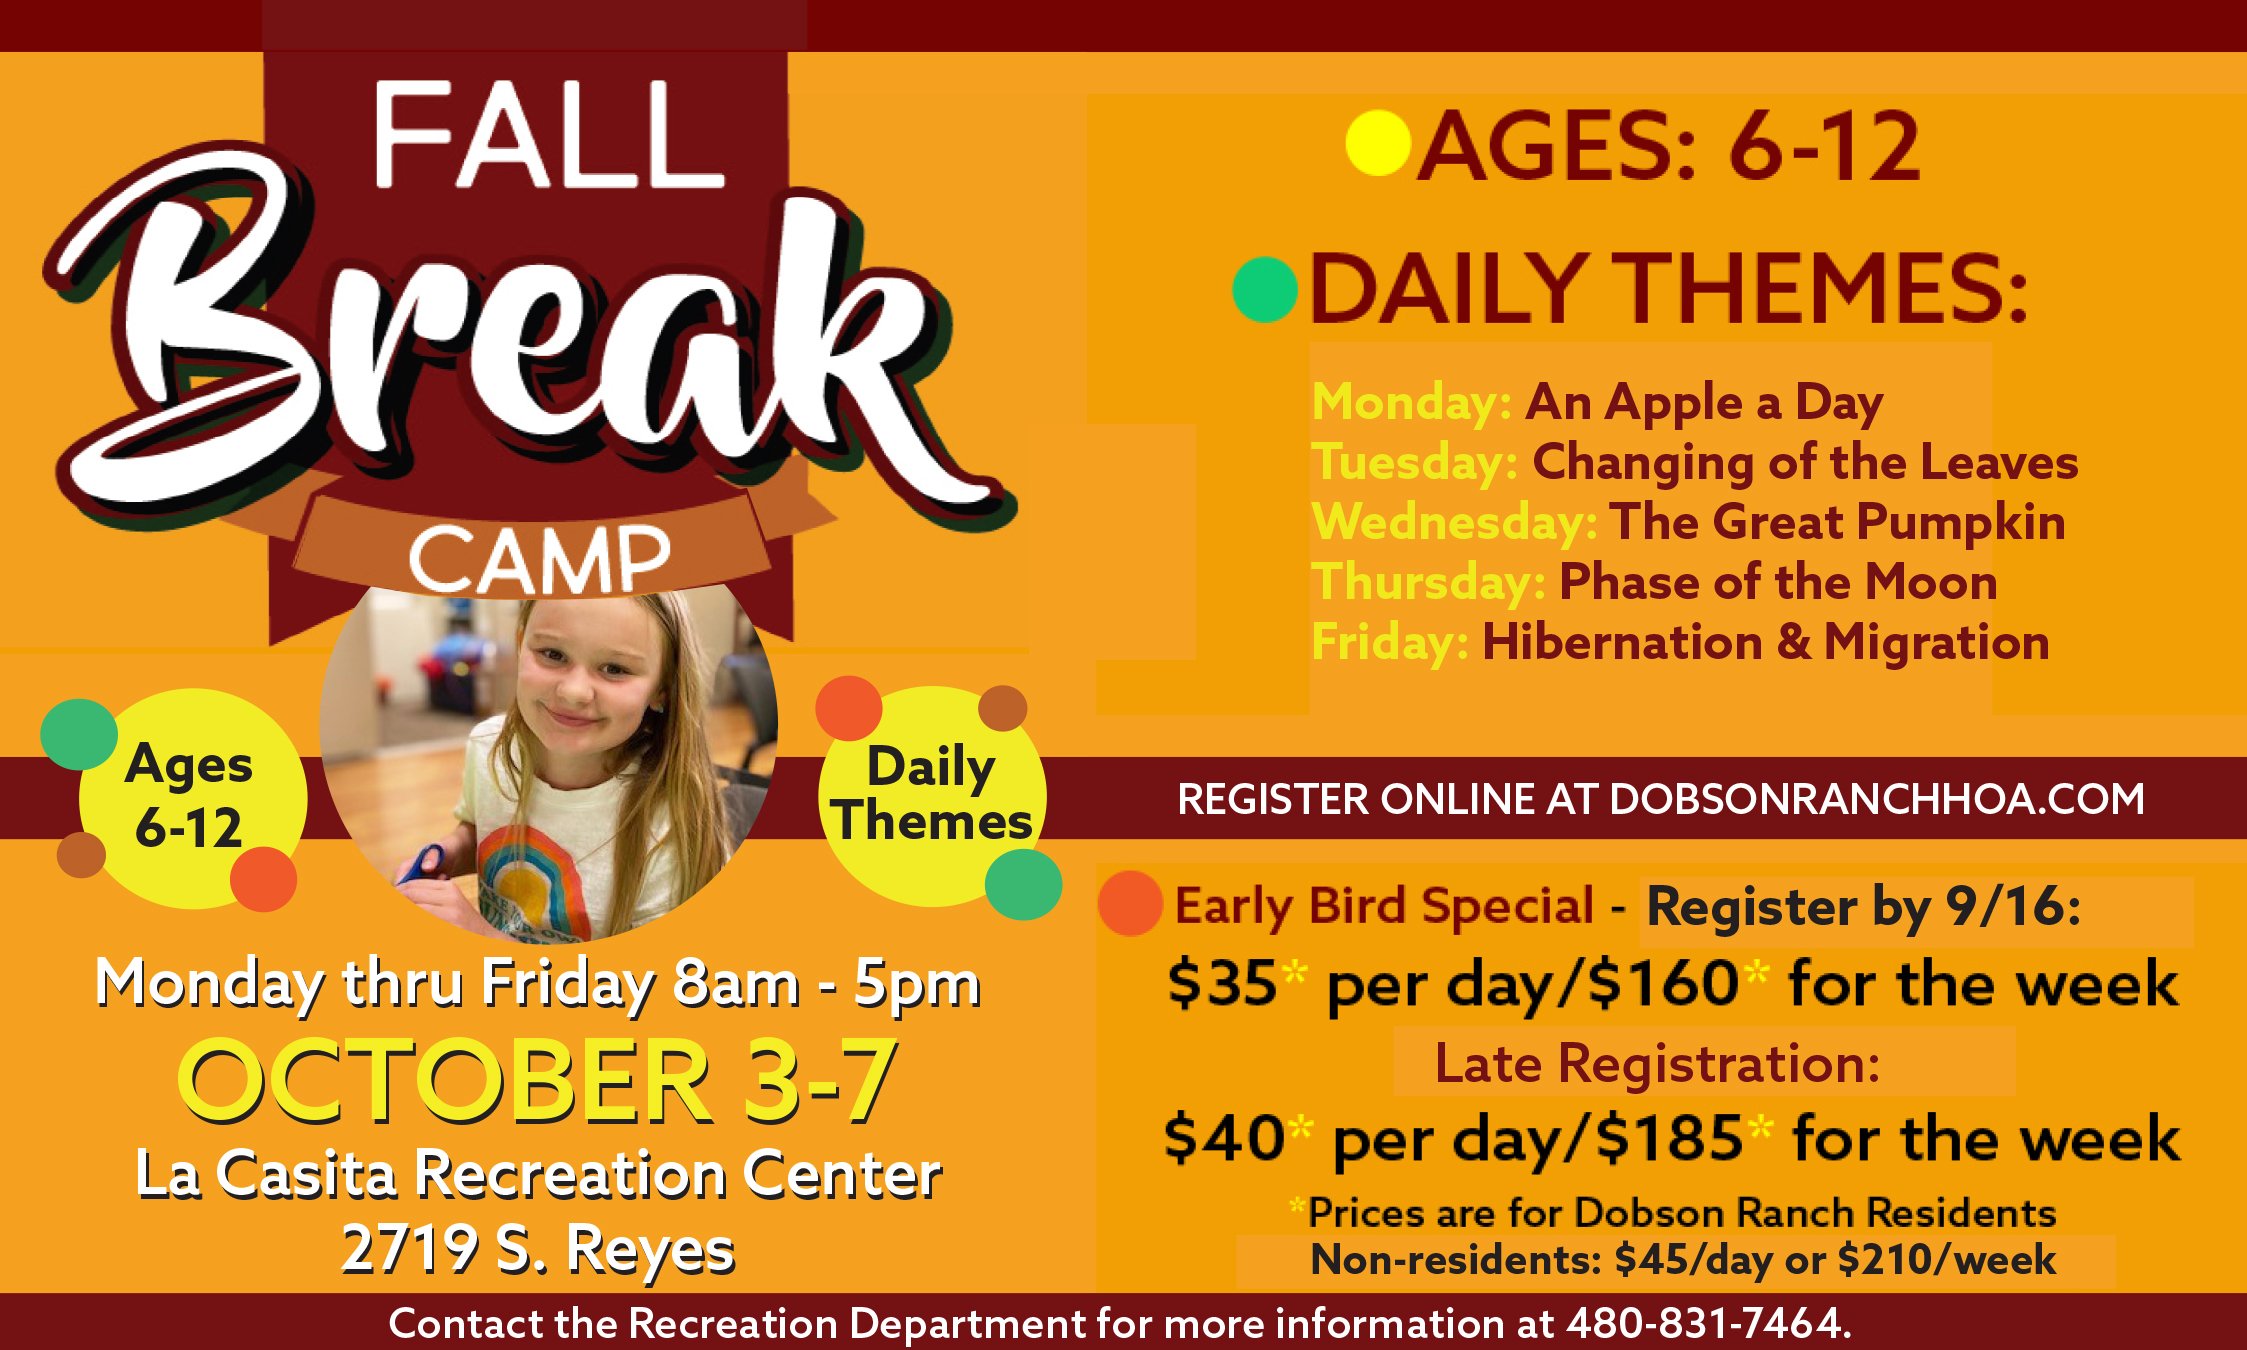 Fall Break Camp Dobson Ranch HOA